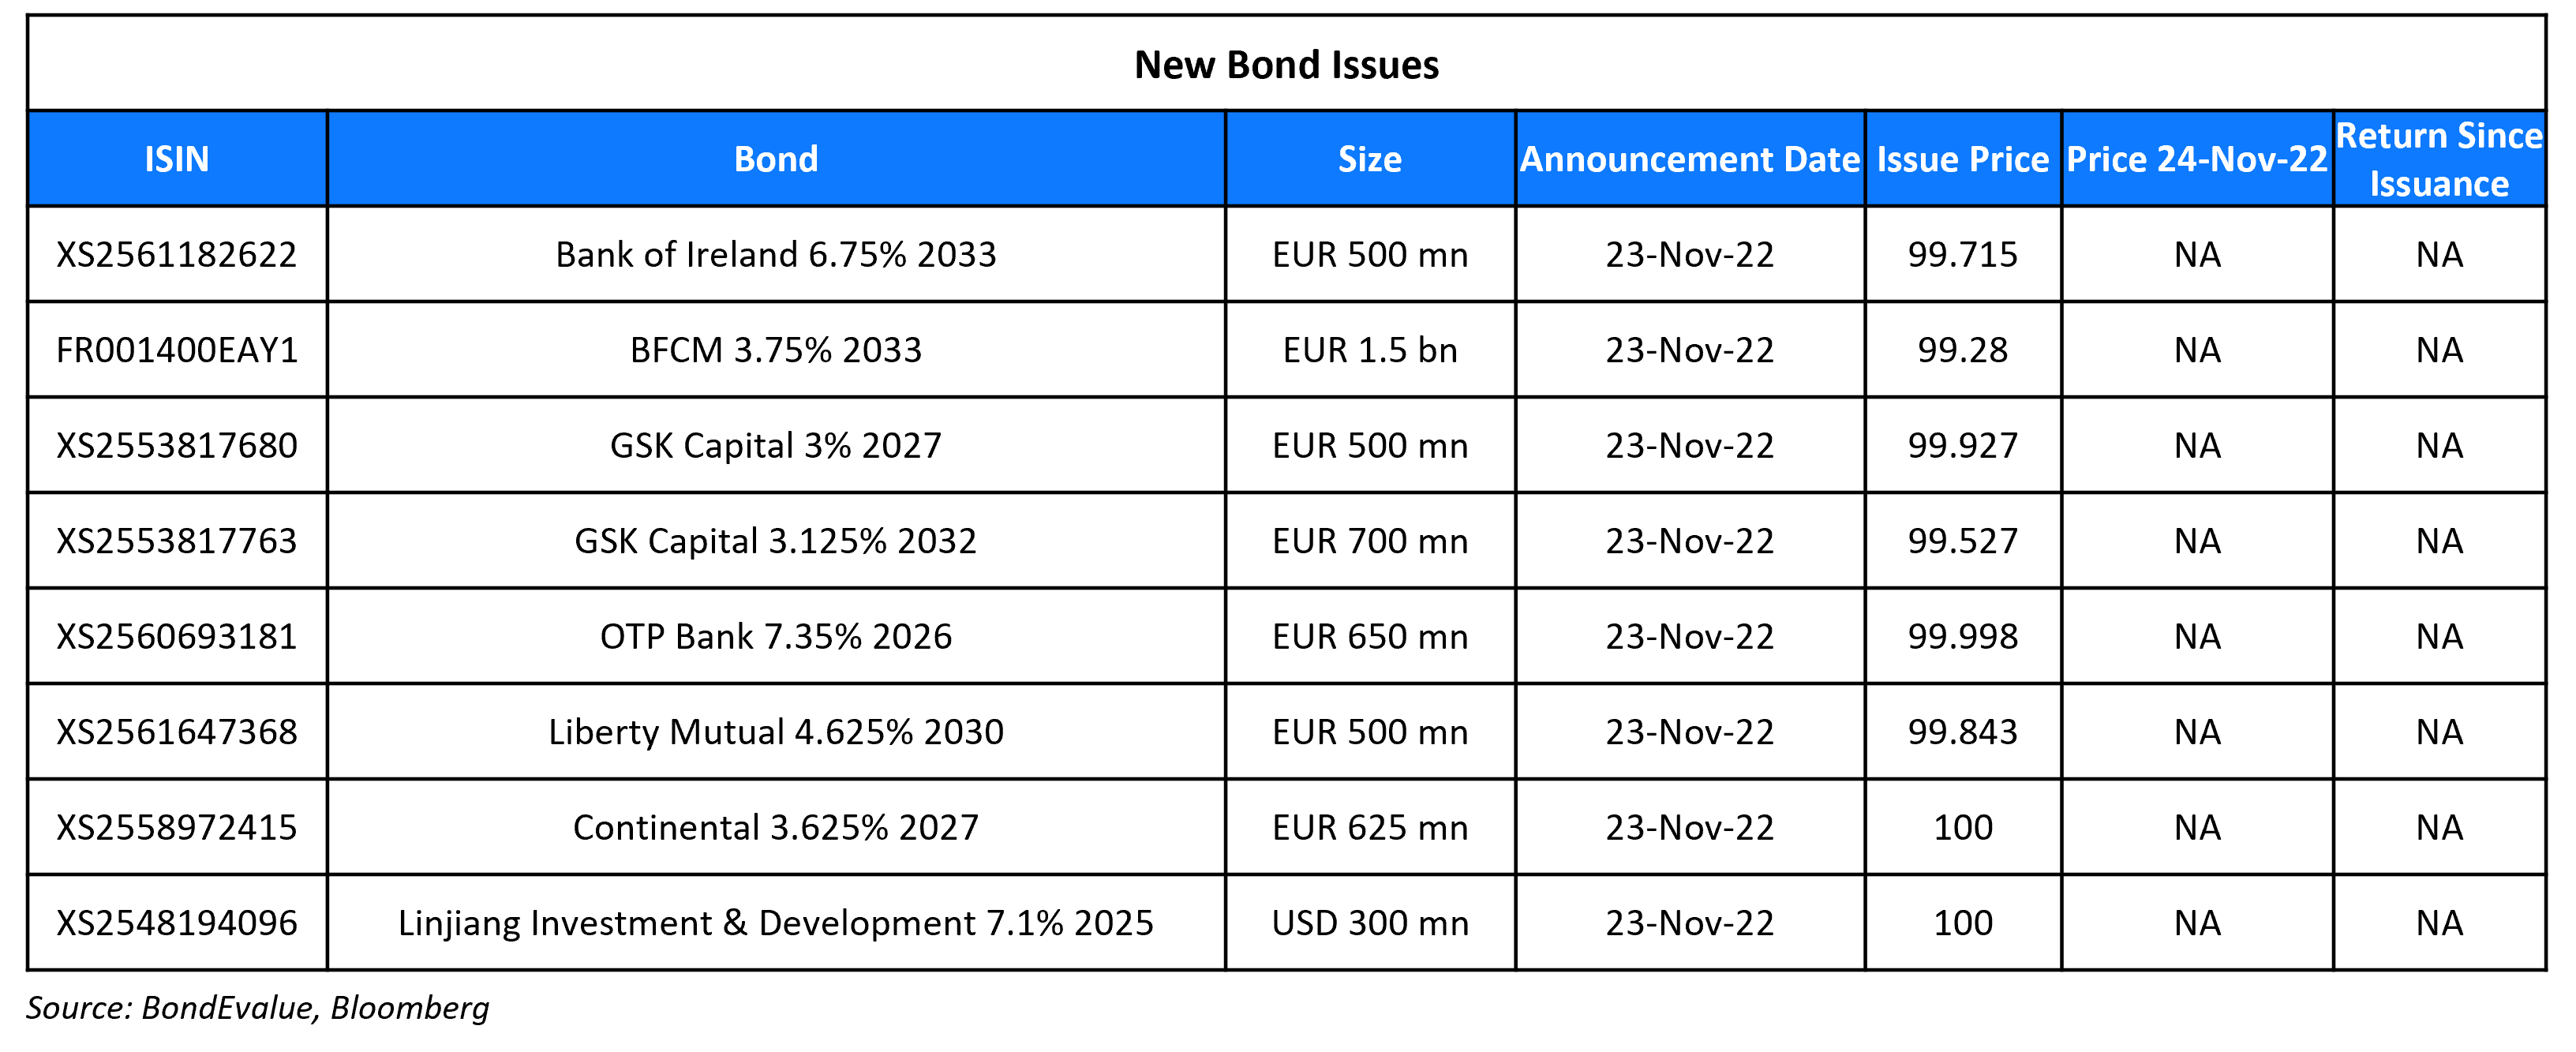 New Bond Issues 24 Nov 22